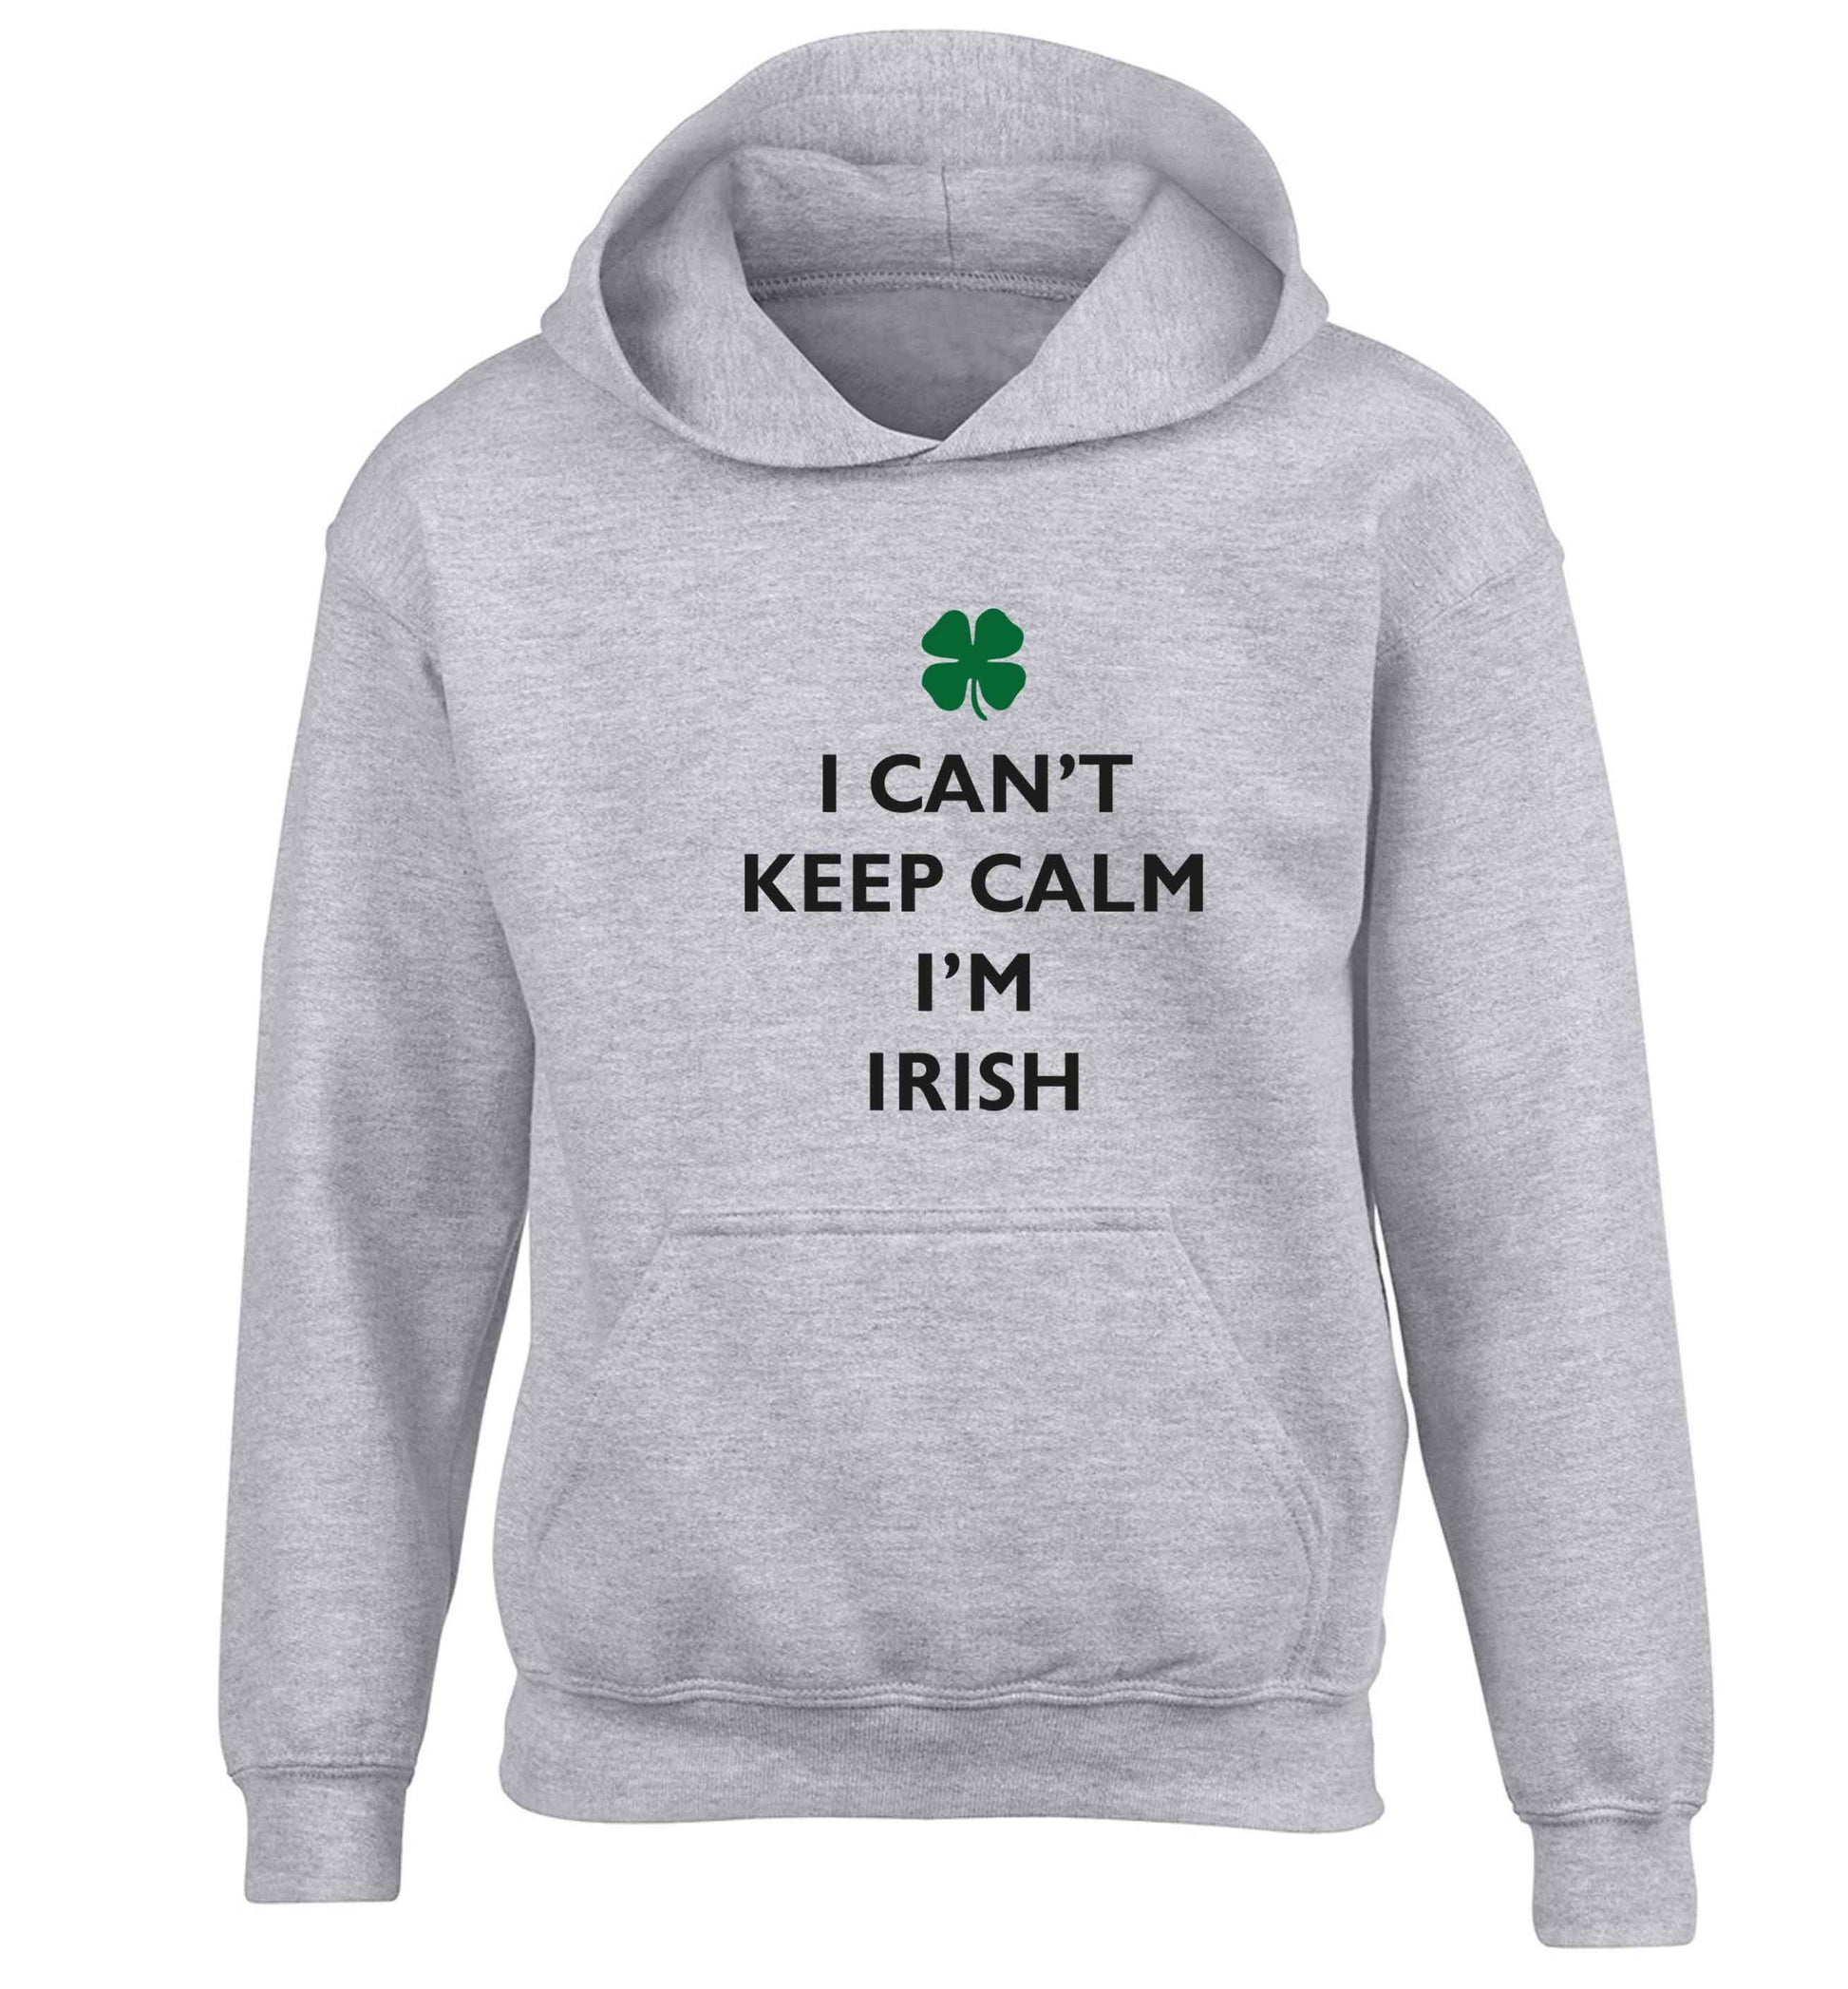 I can't keep calm I'm Irish children's grey hoodie 12-13 Years